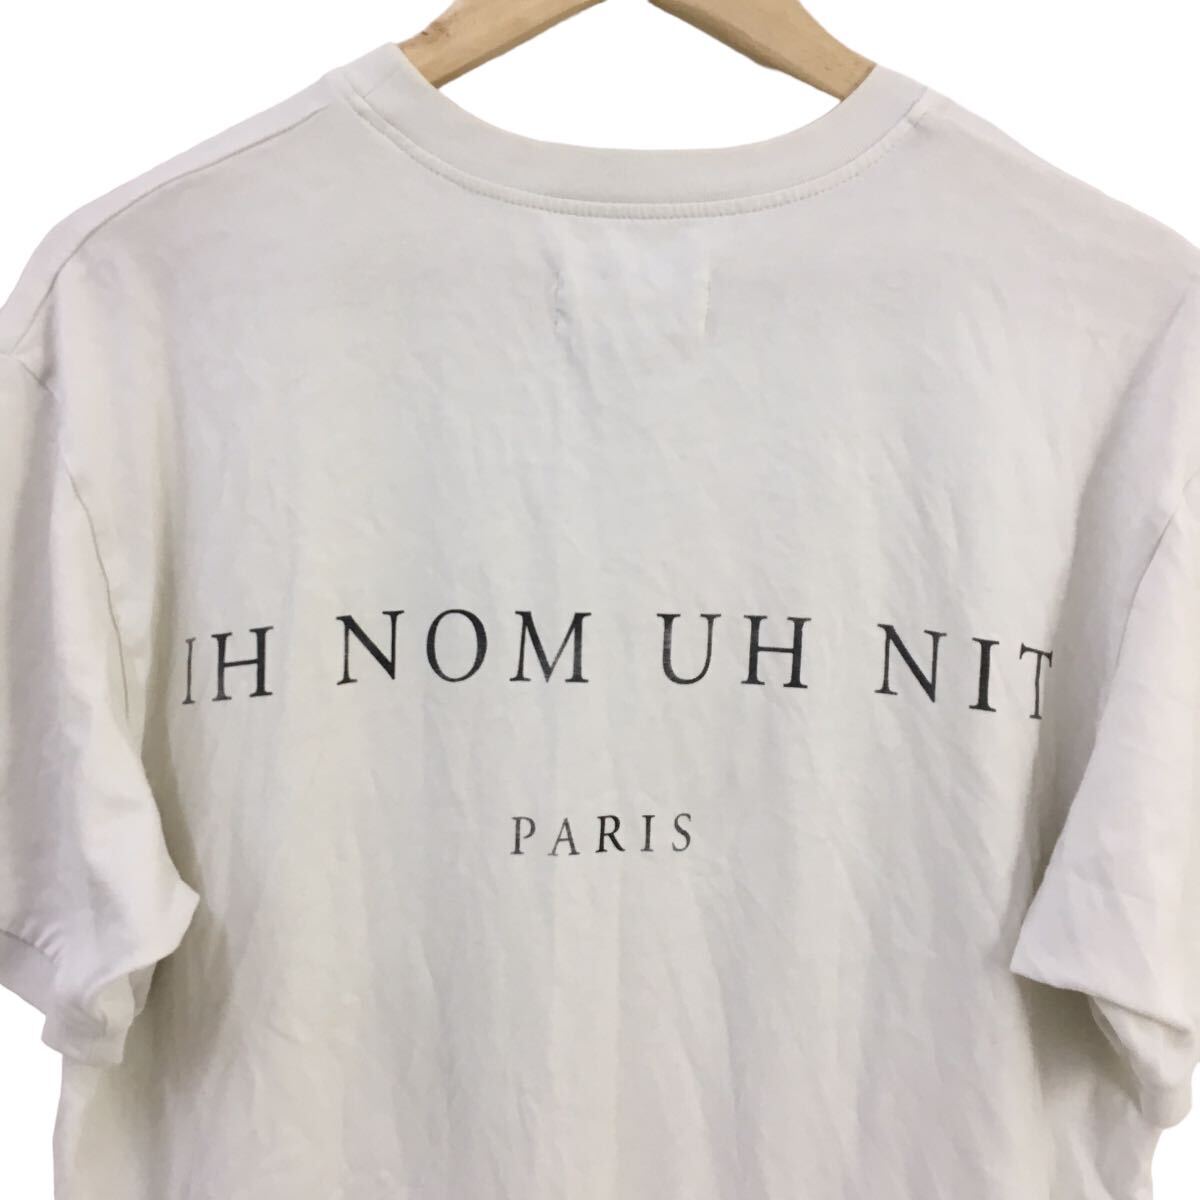 D532-⑥ イタリア製 IH NOM UH NIT インノミネイト 半袖 Tシャツ トップス プルオーバー クルーネック 綿100% ホワイト メンズ L_画像6